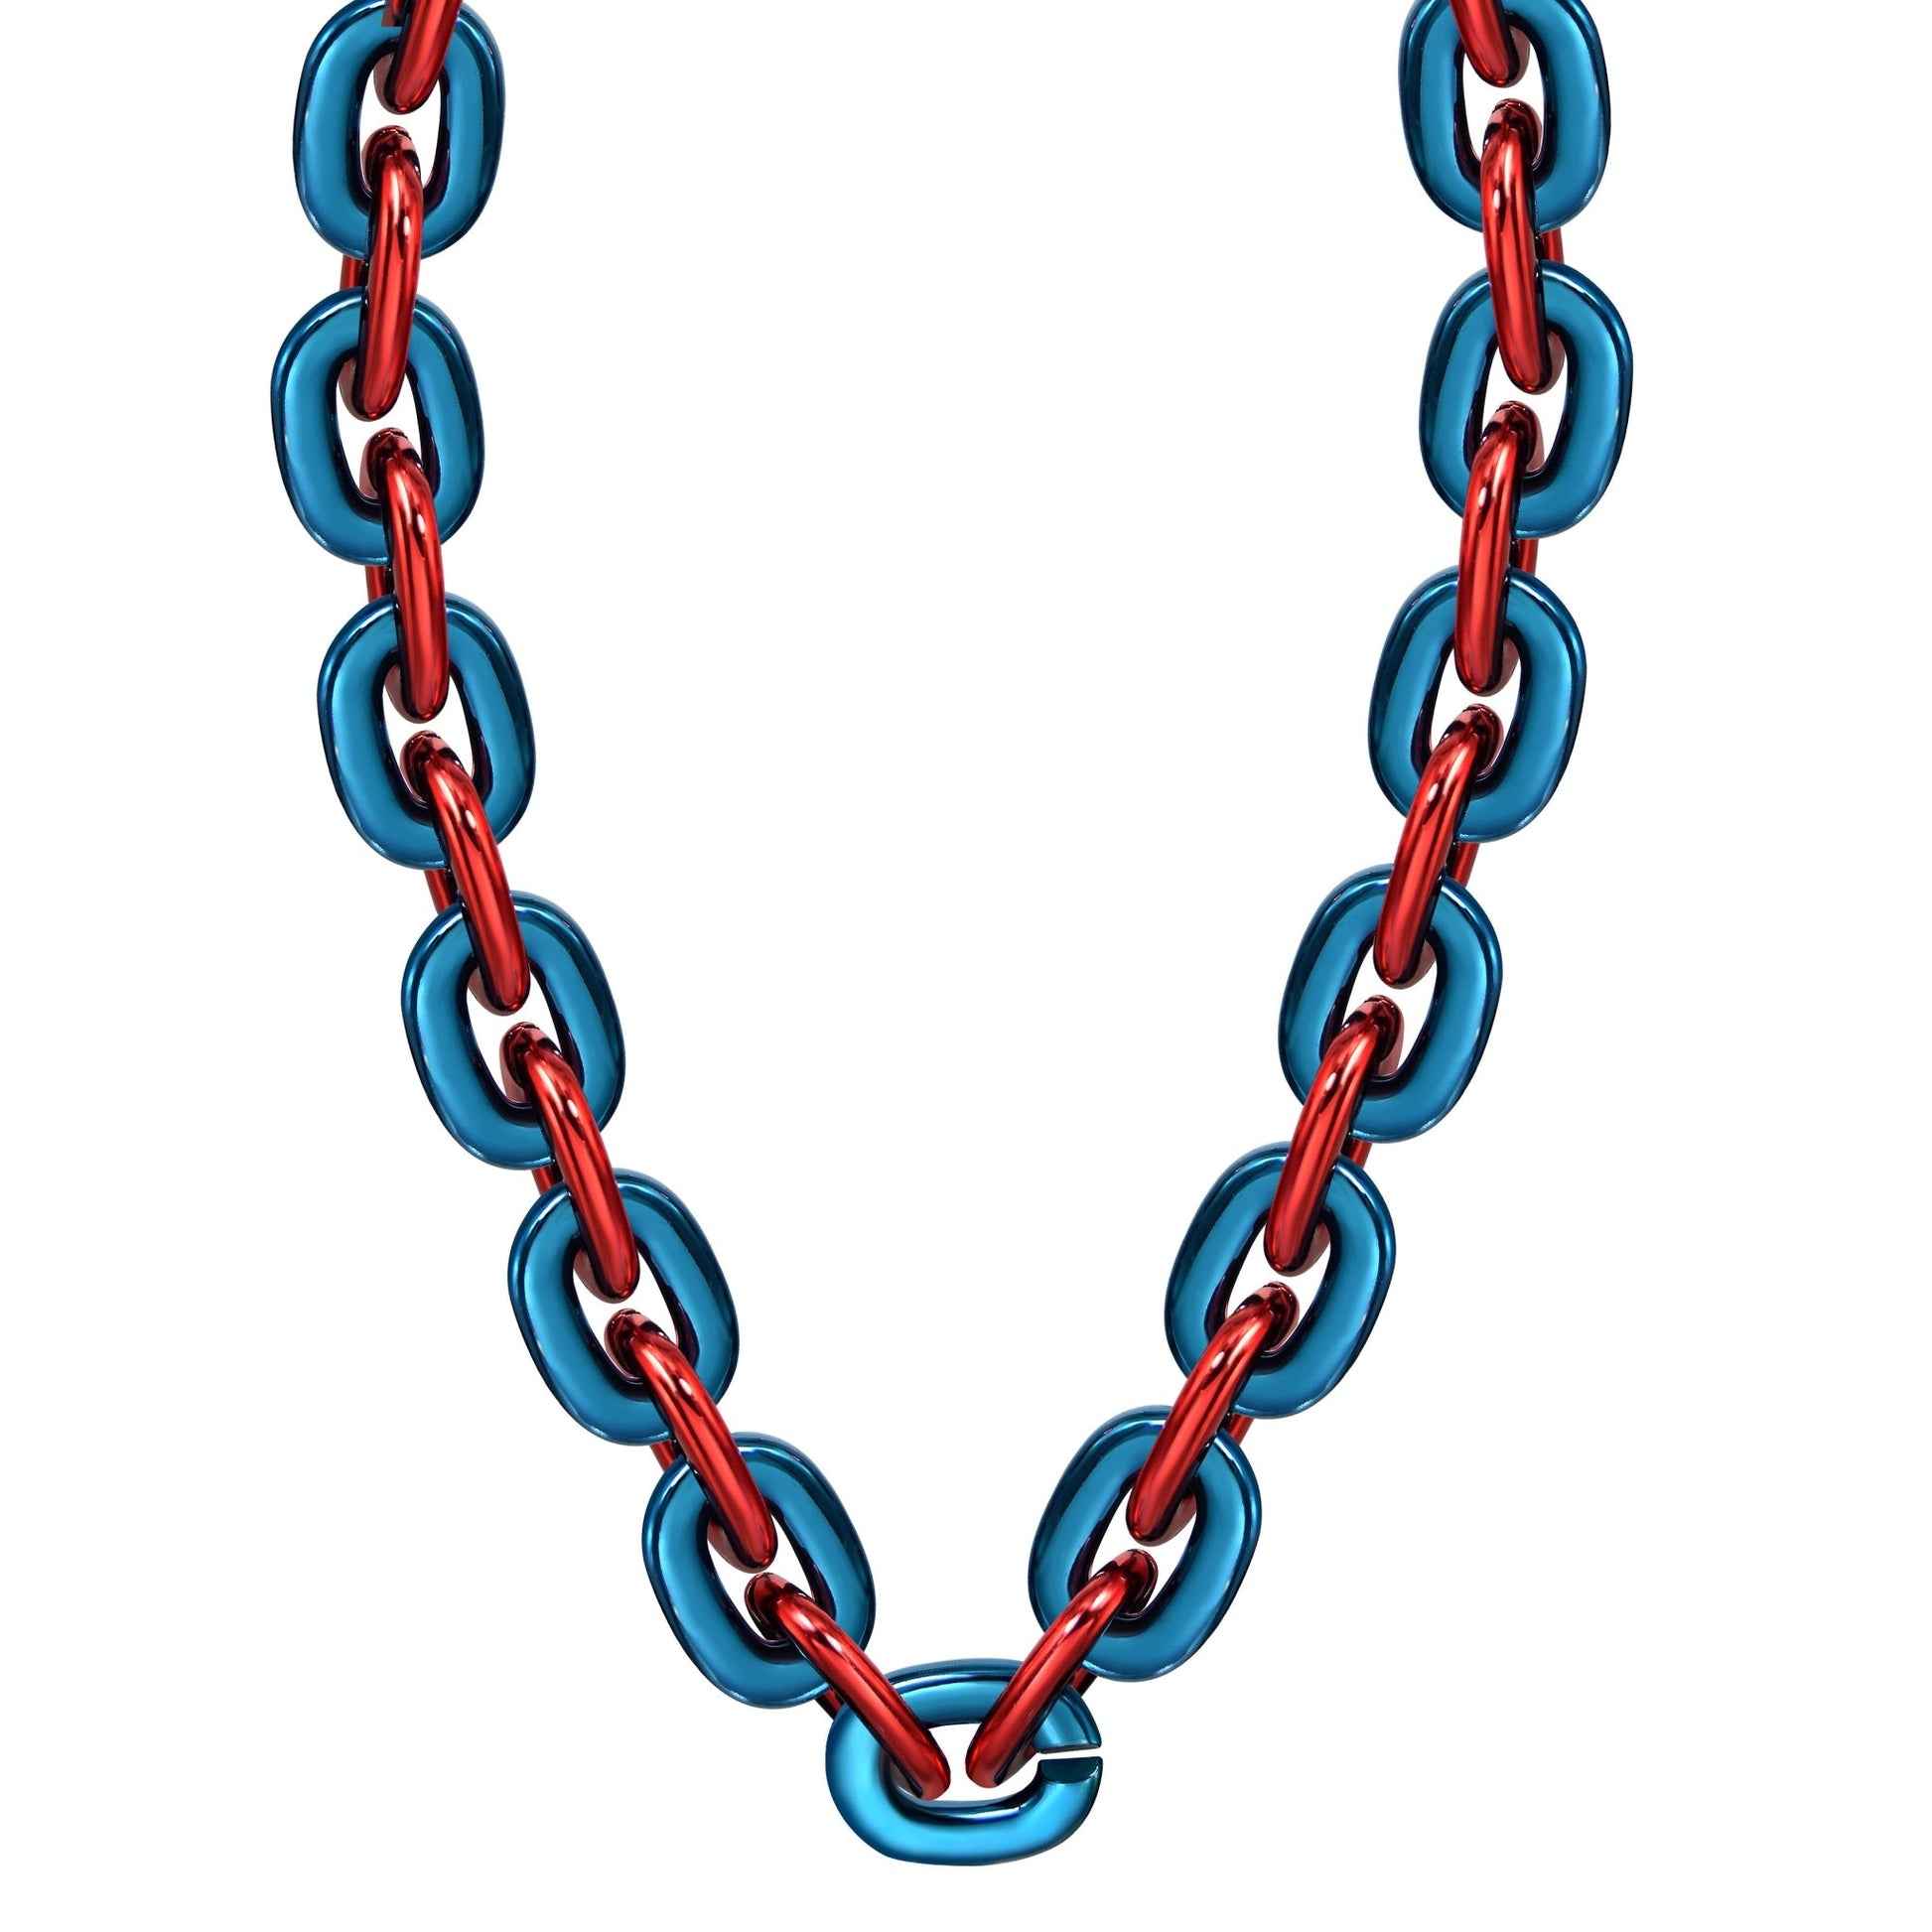 Jumbo Fan Chain Necklace - Gamedays Gear - Navy / Red